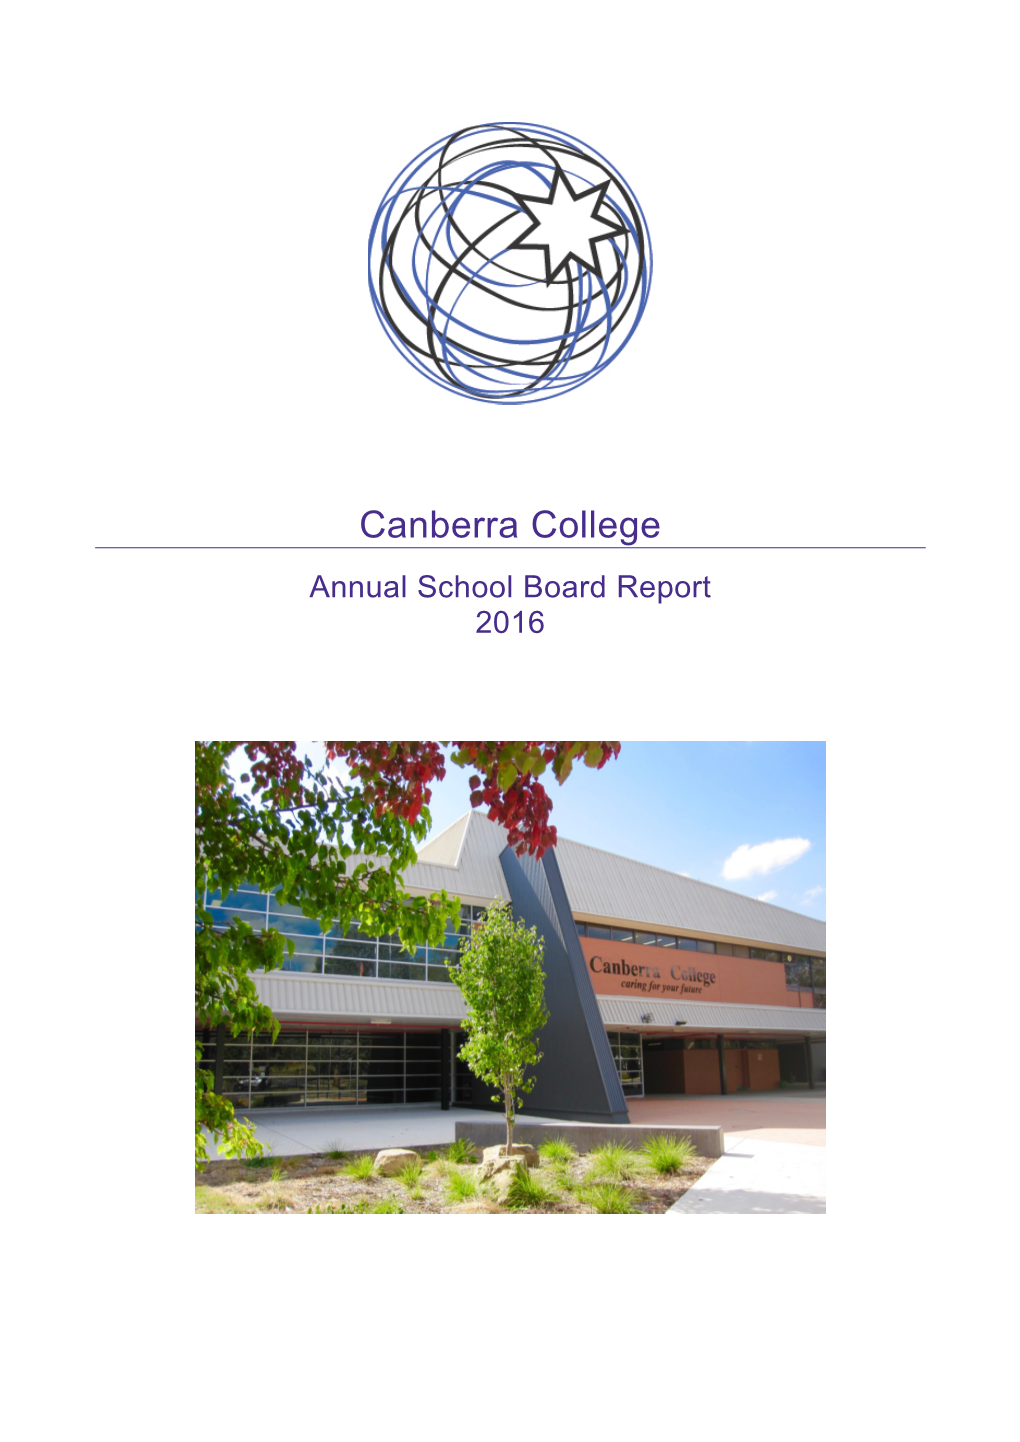 Canberra College Annual School Board Report 2016